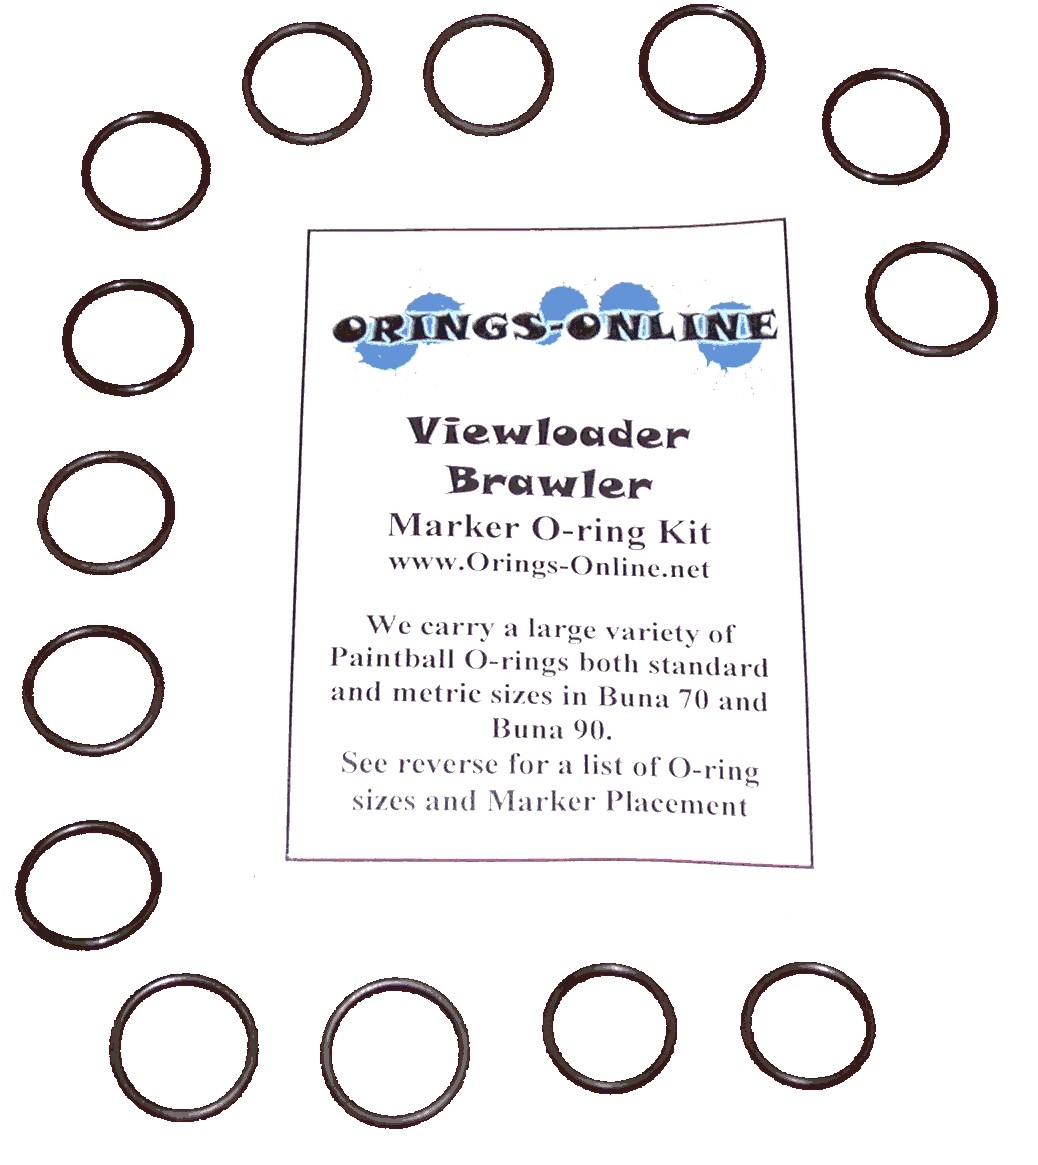 Viewloader Brawler Marker O-ring Kit